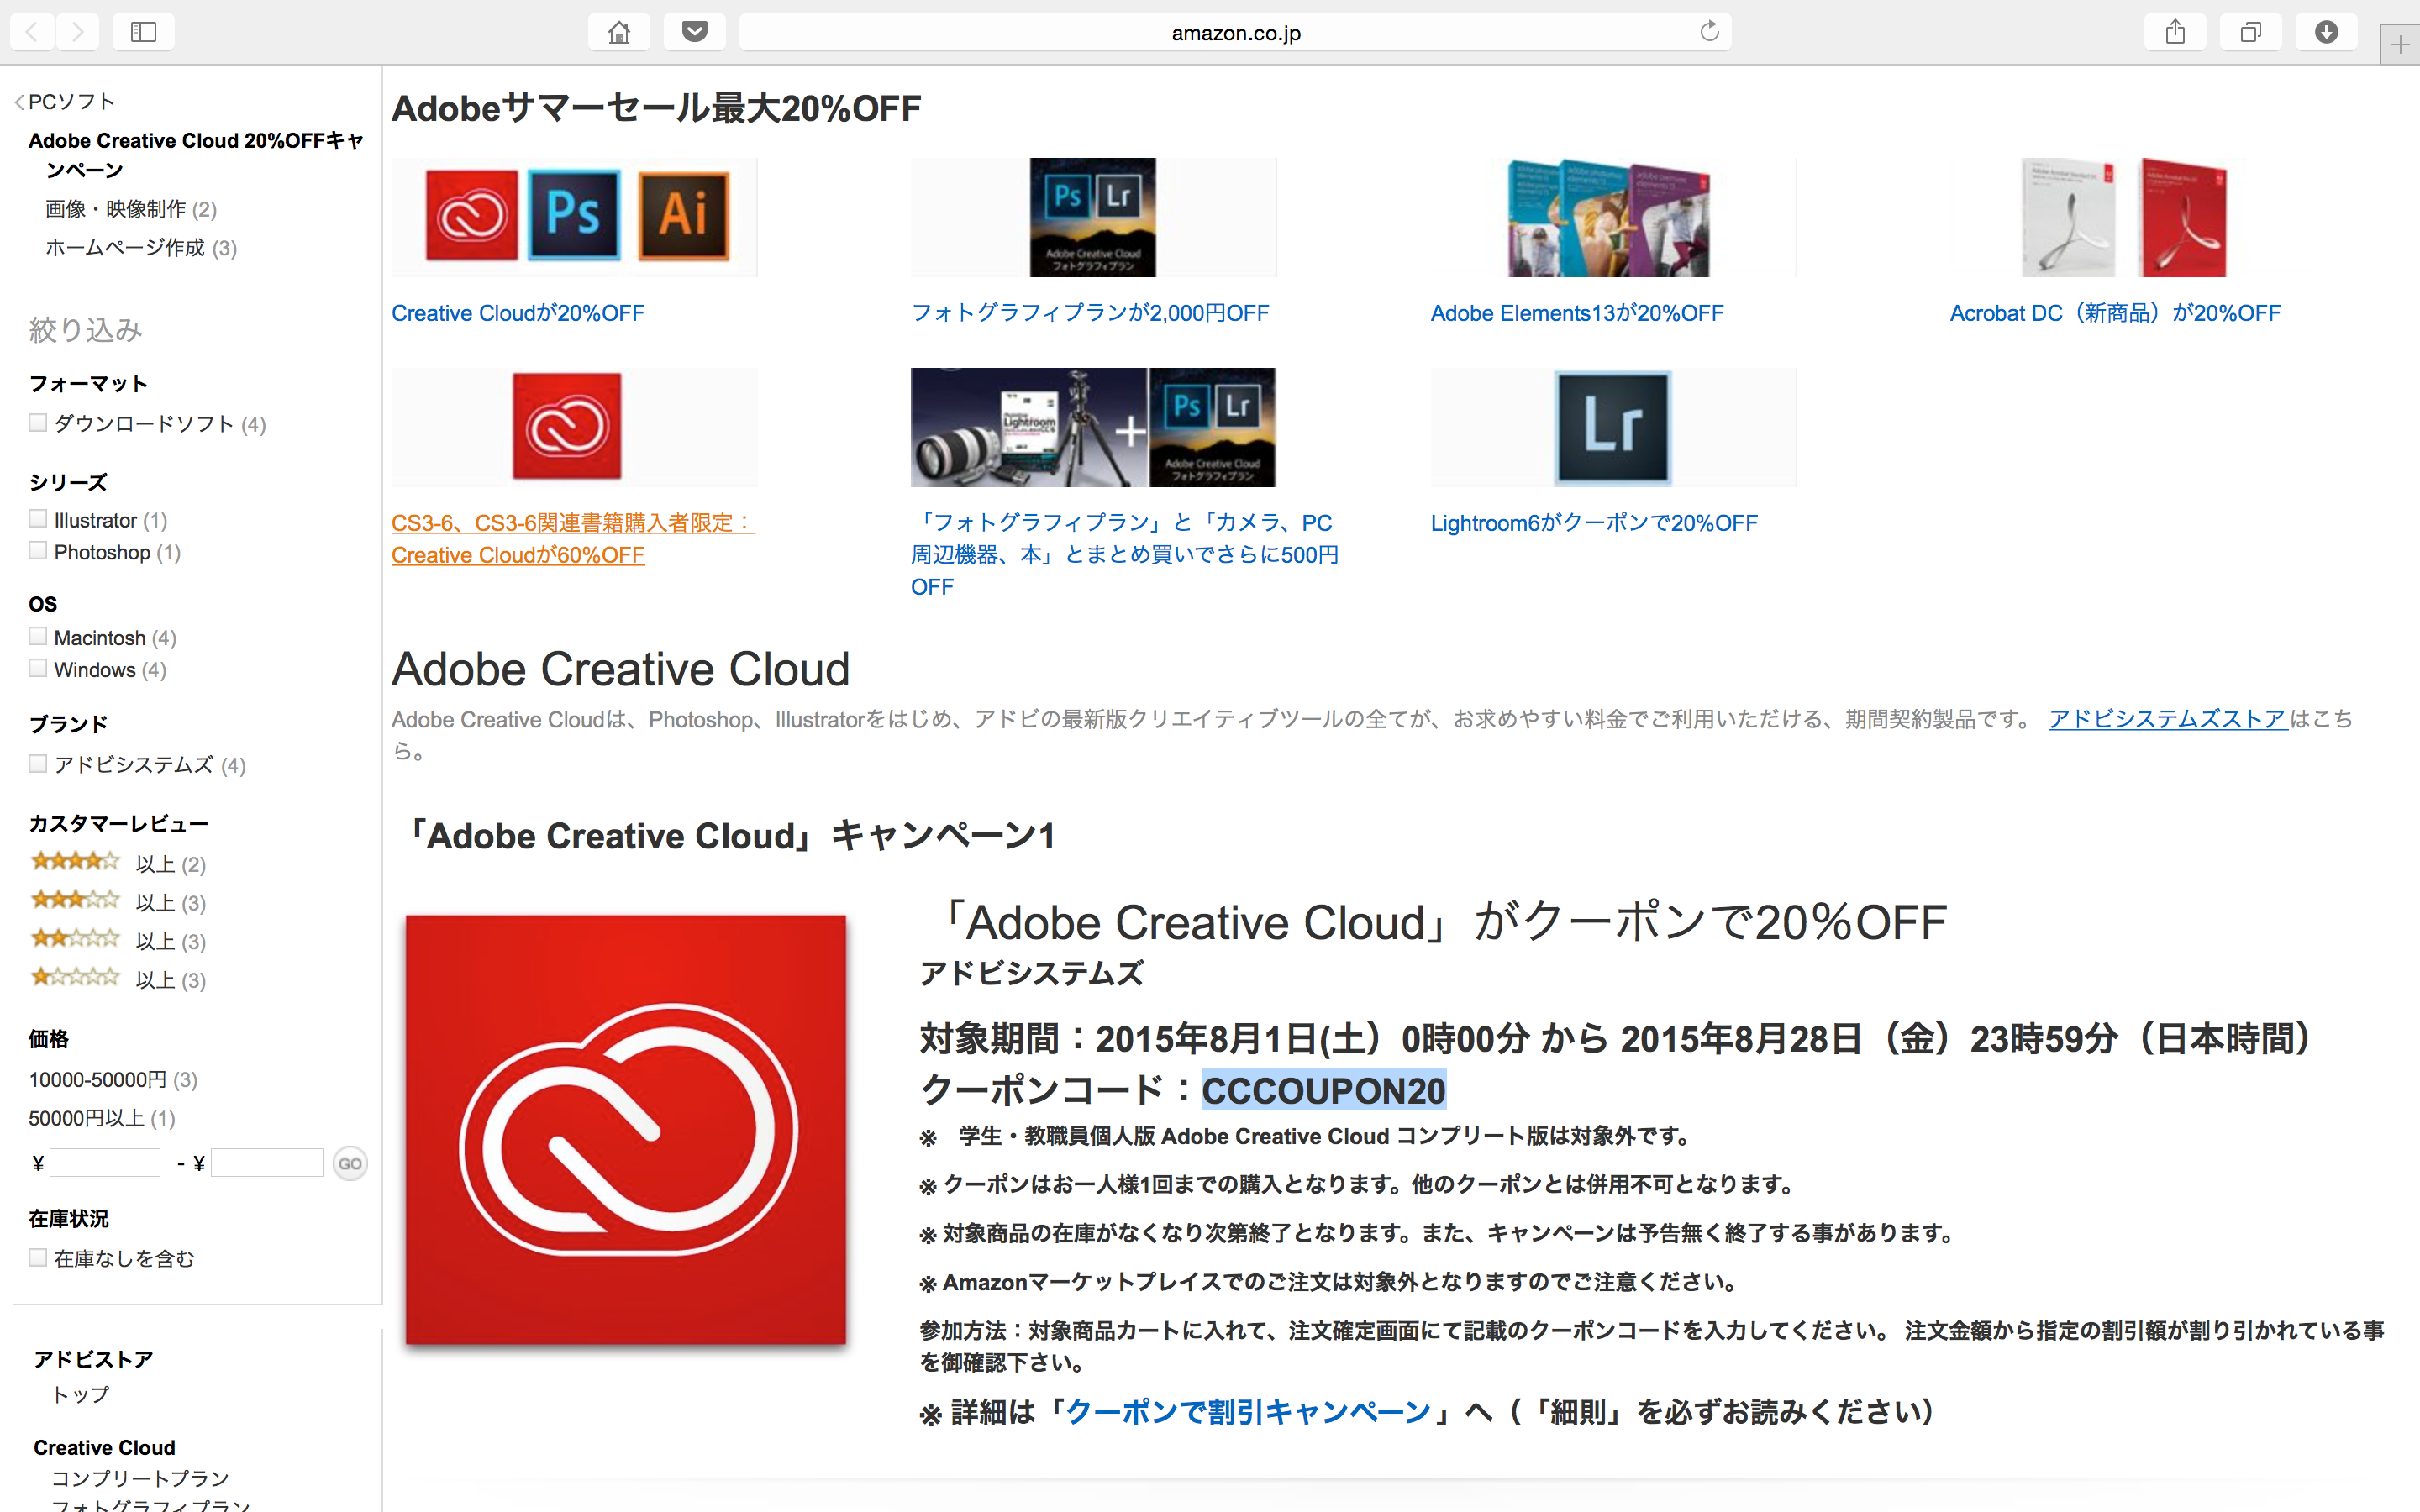 Adobe Creative Cloud がレジで 20% OFF